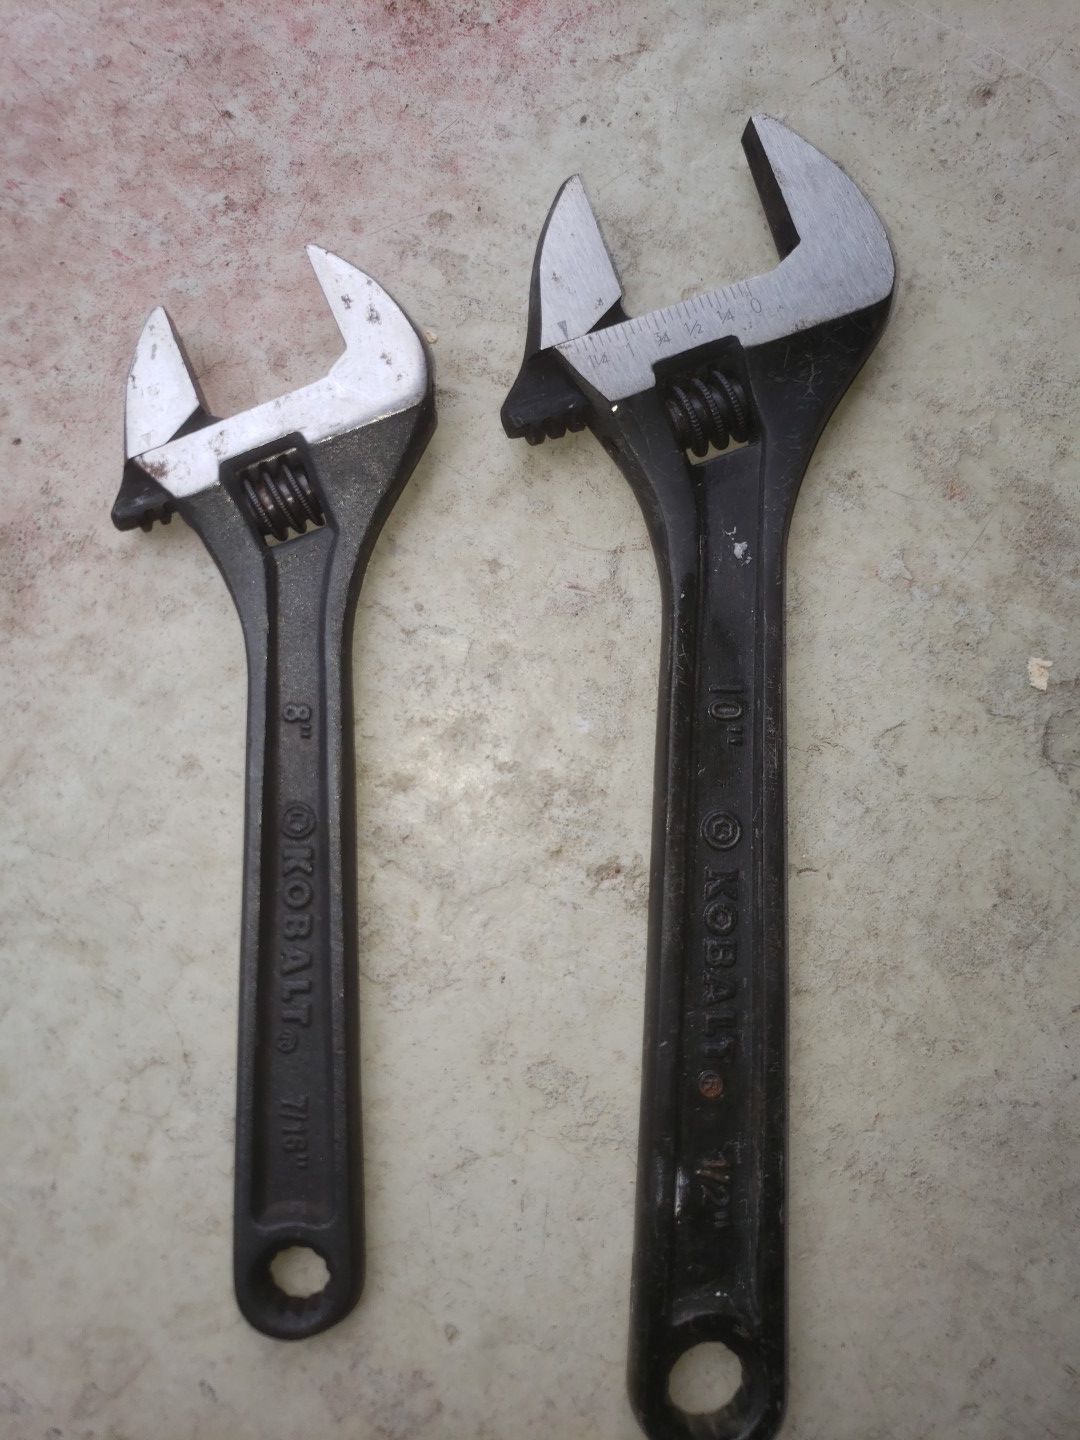 Kobalt adjustable wrenches